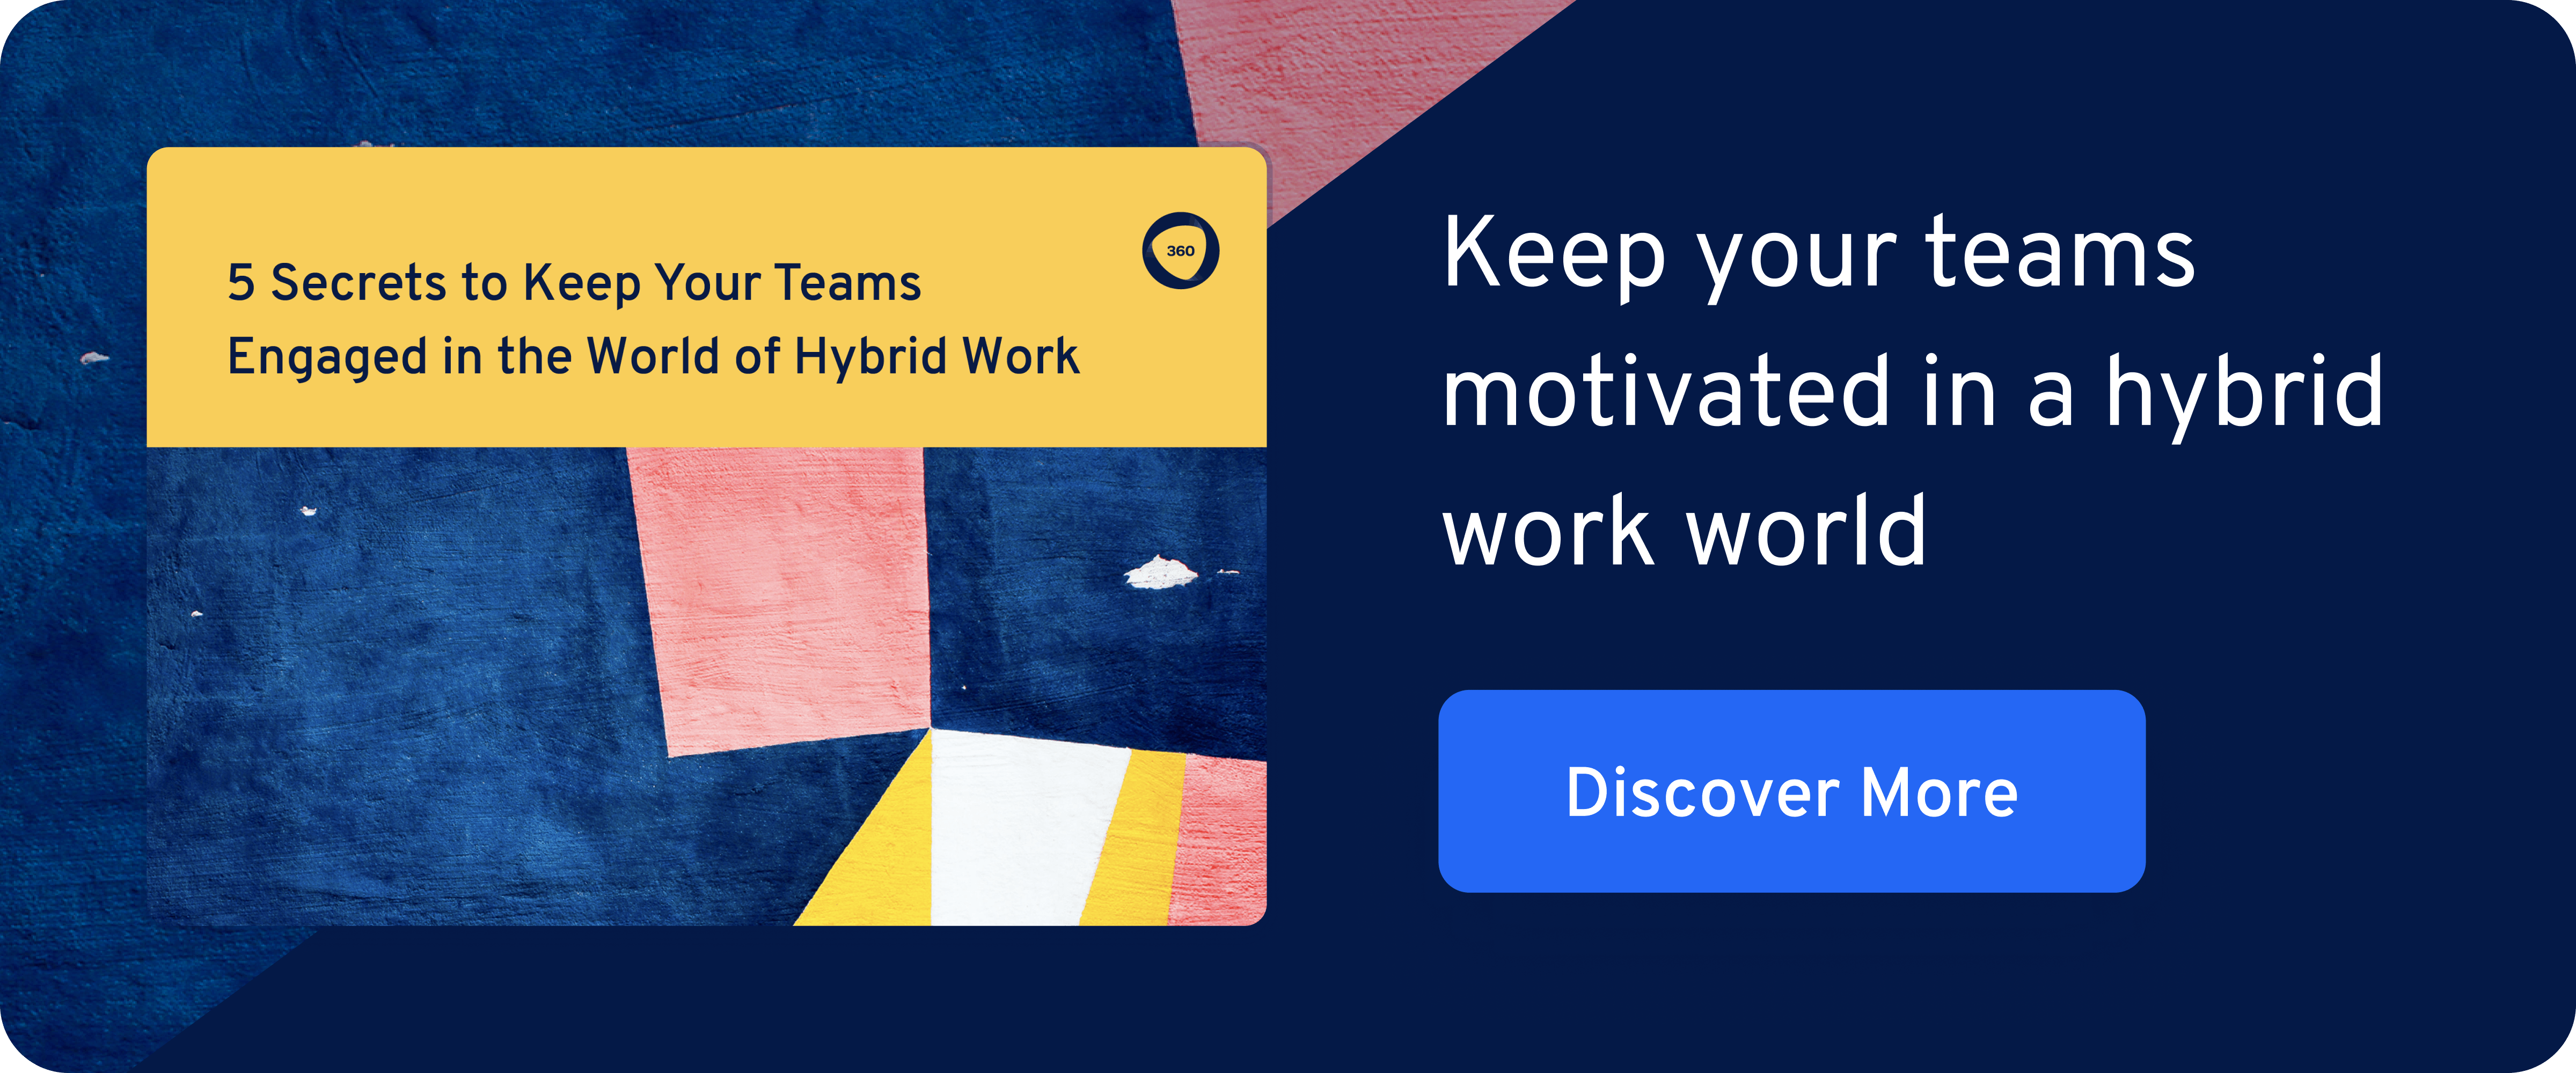 Hybrid work world cheat sheet